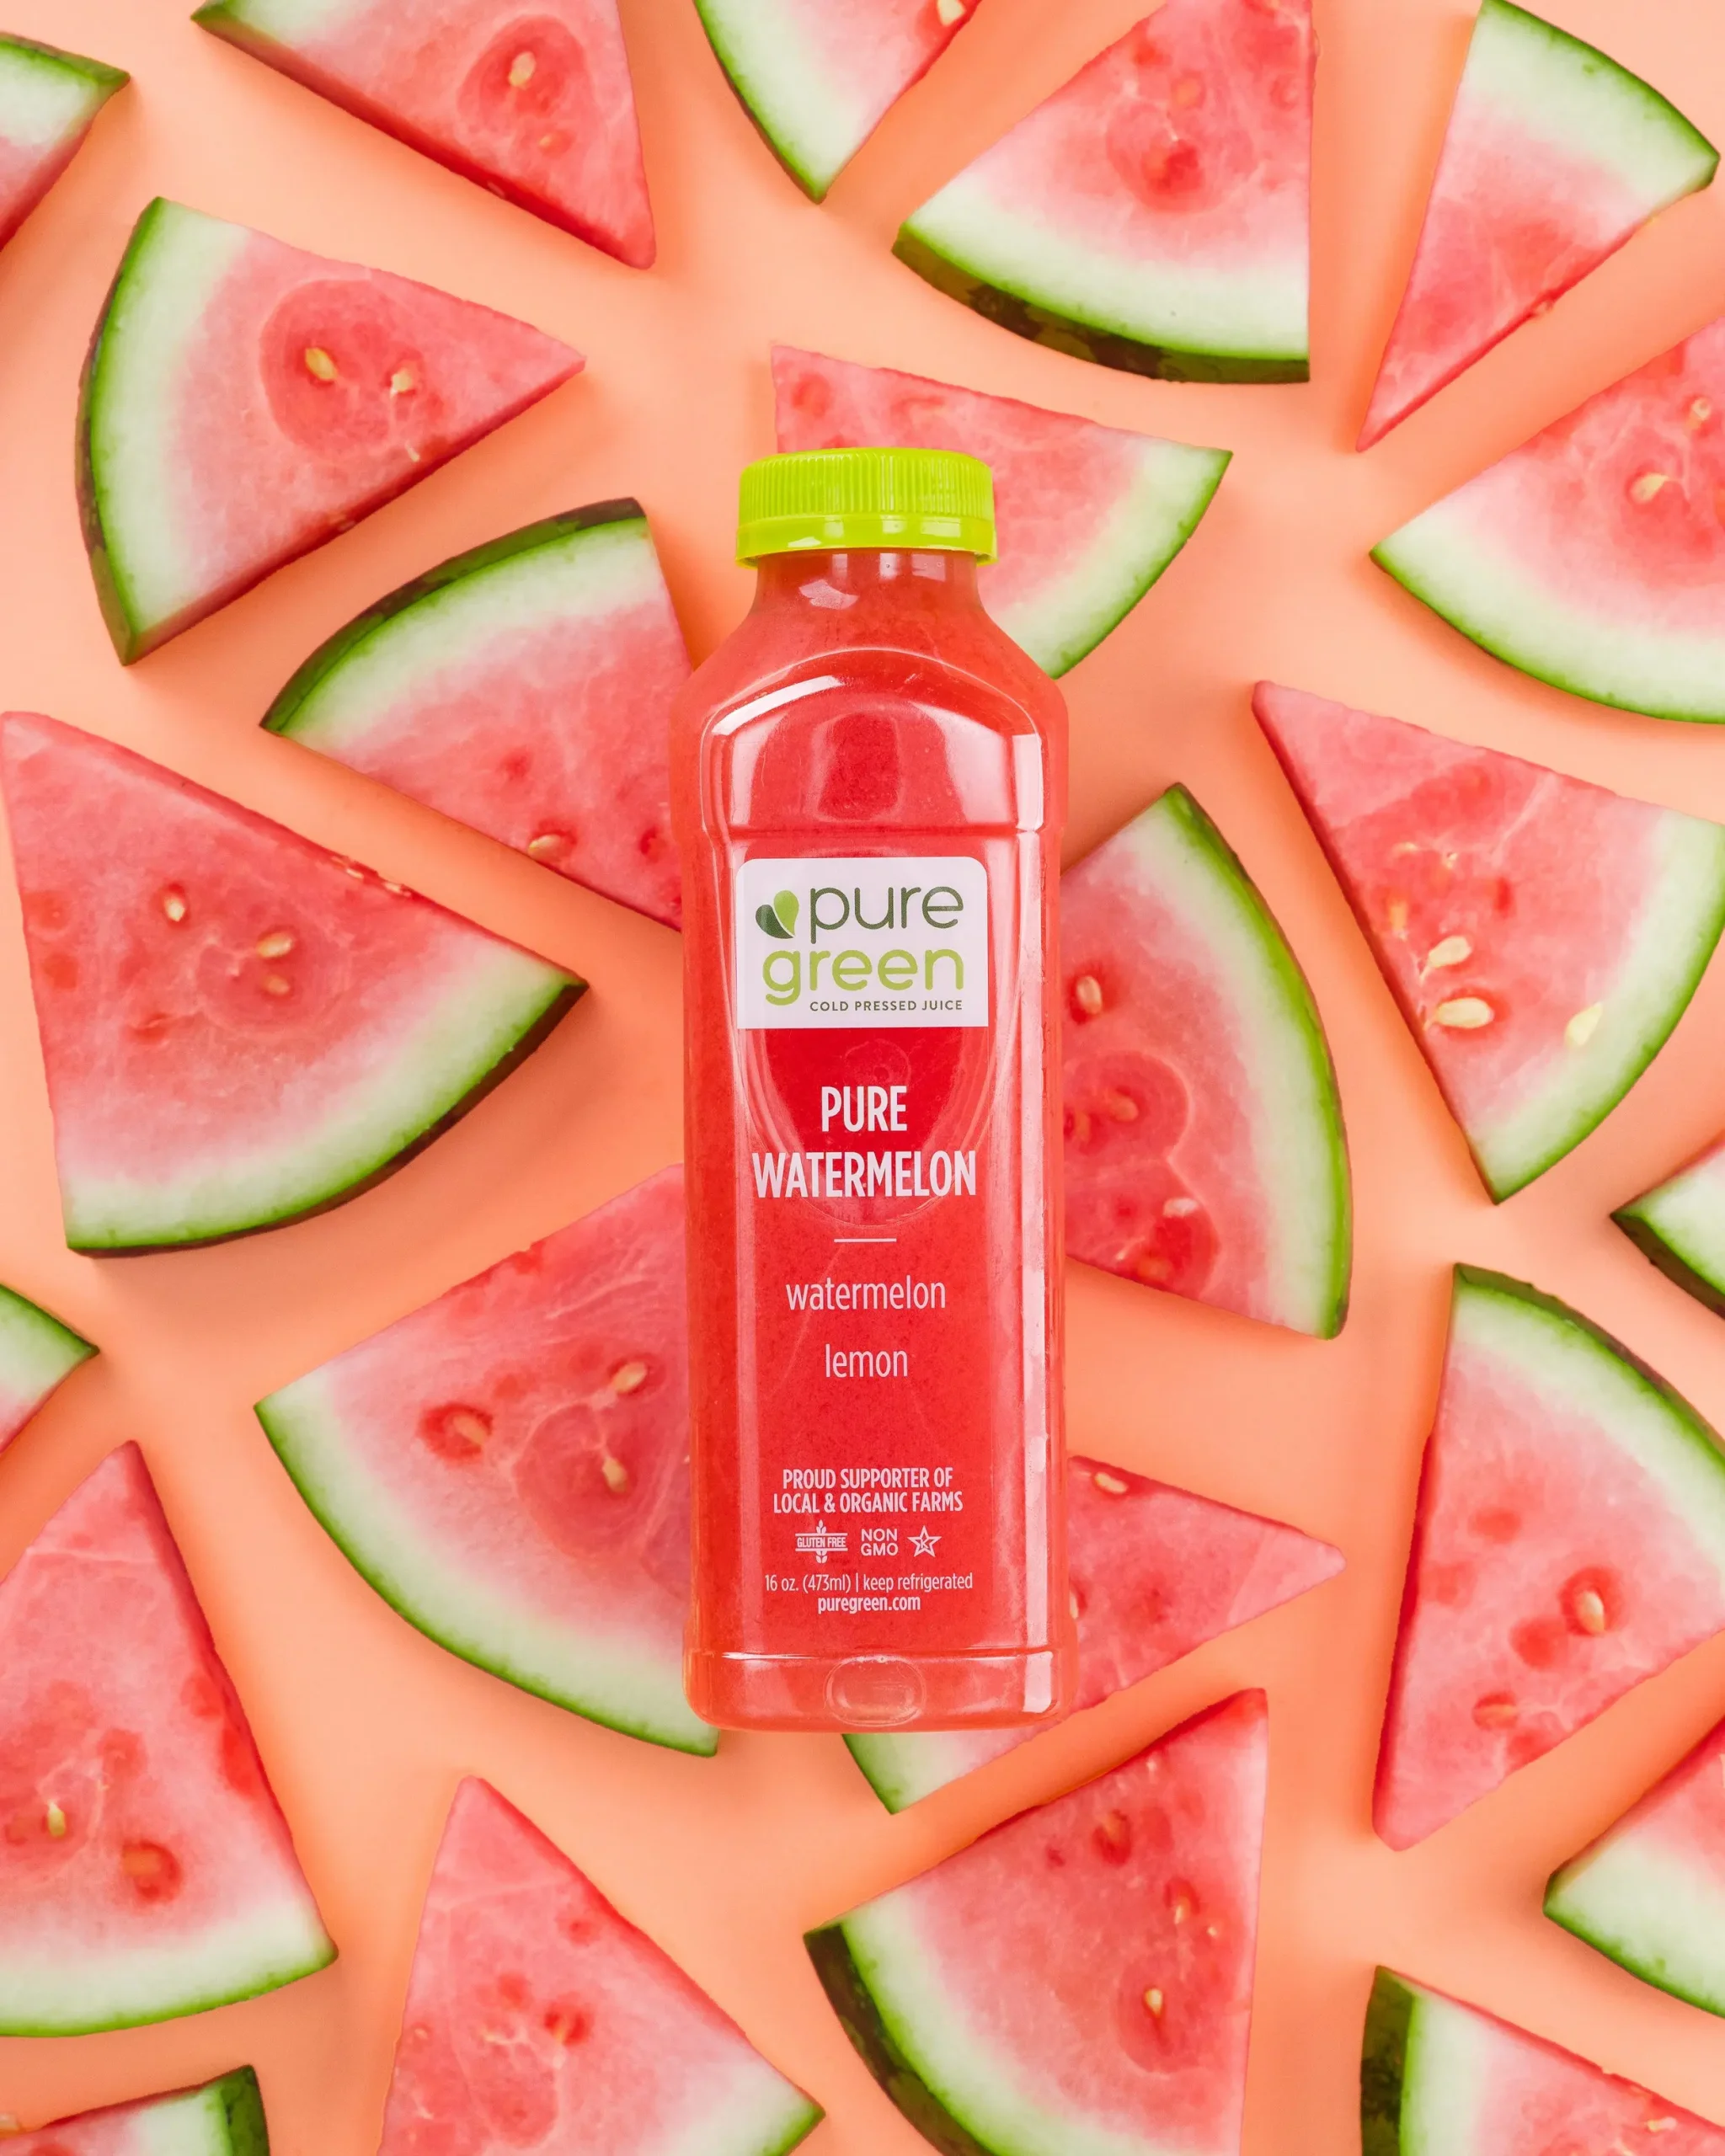 pure watermelon cold pressed juice